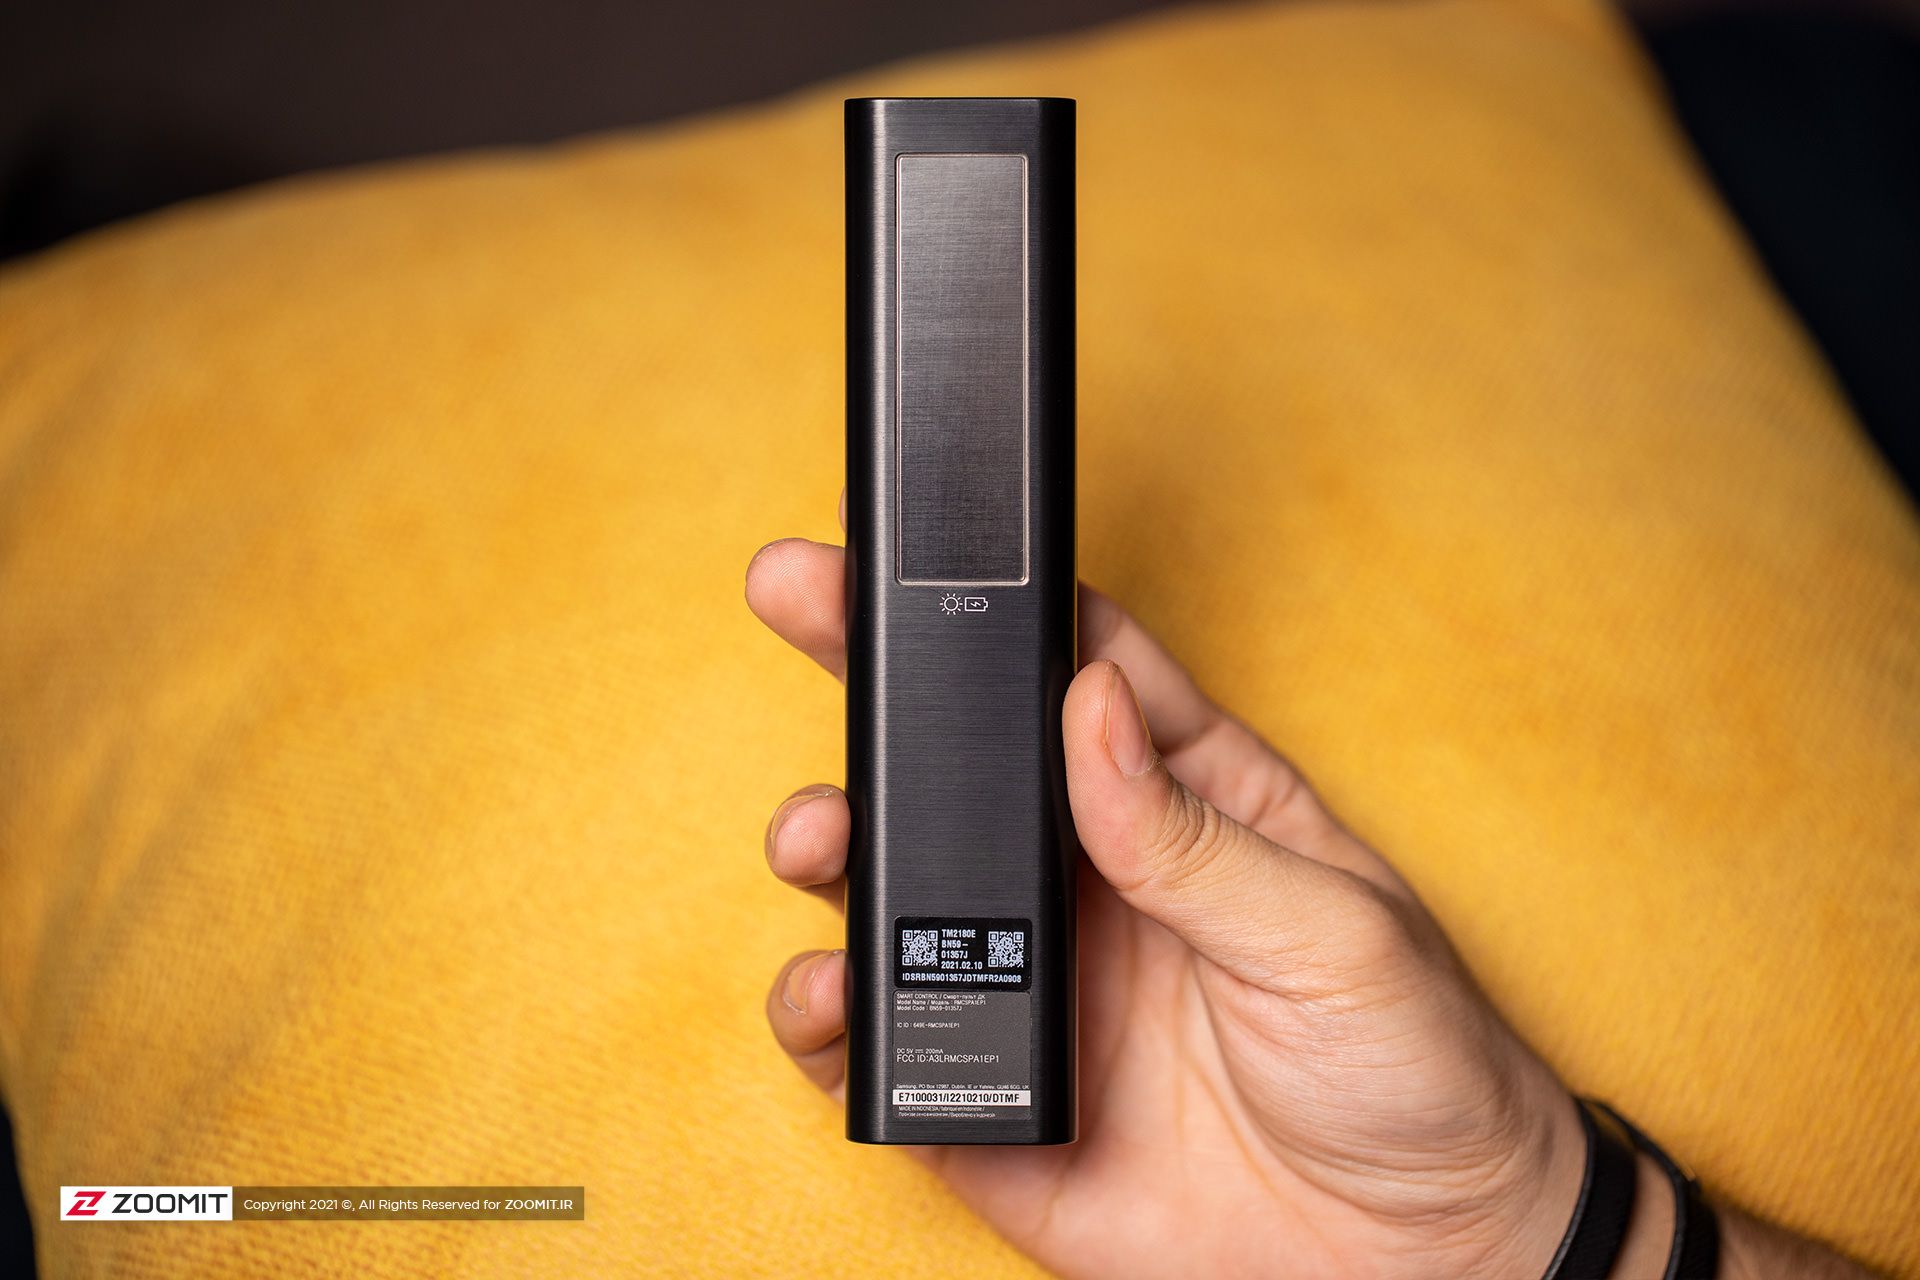 Samsung Q80a TV remote control